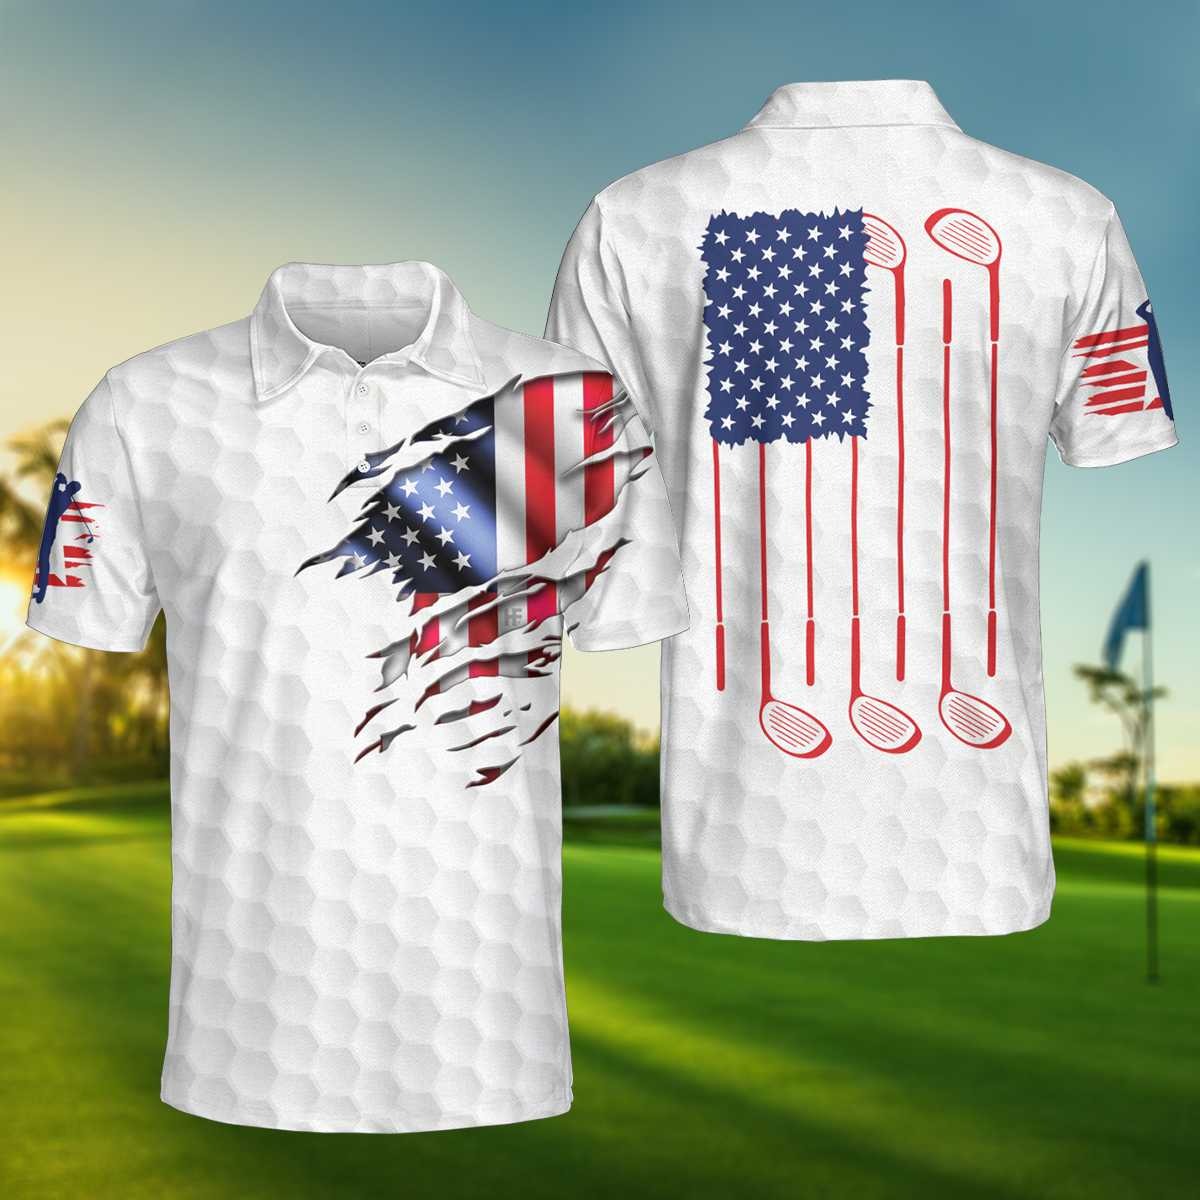 Golf American flag polo shirt2